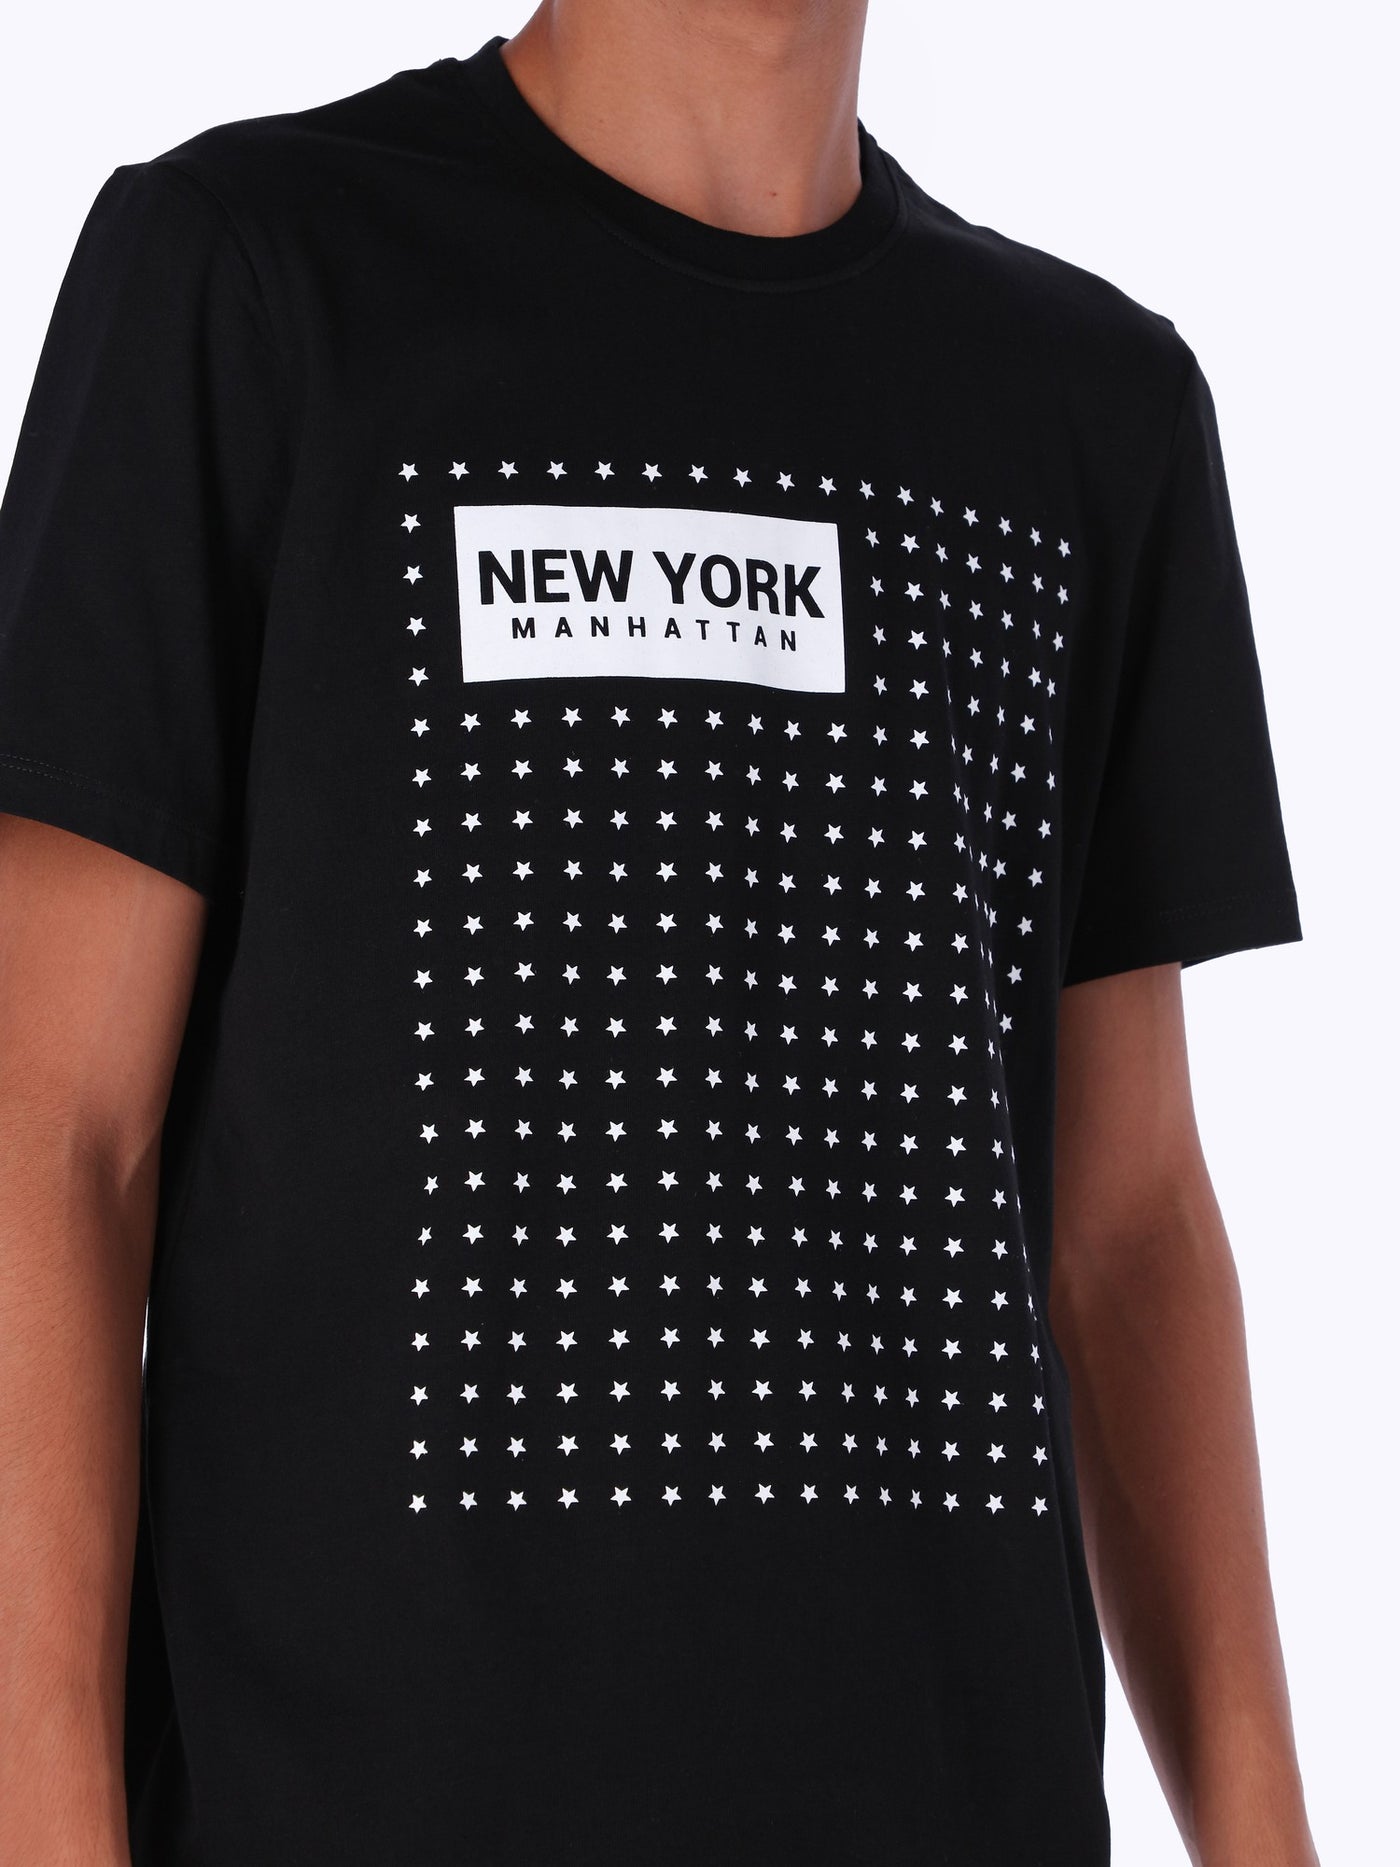 New York Print T-Shirt